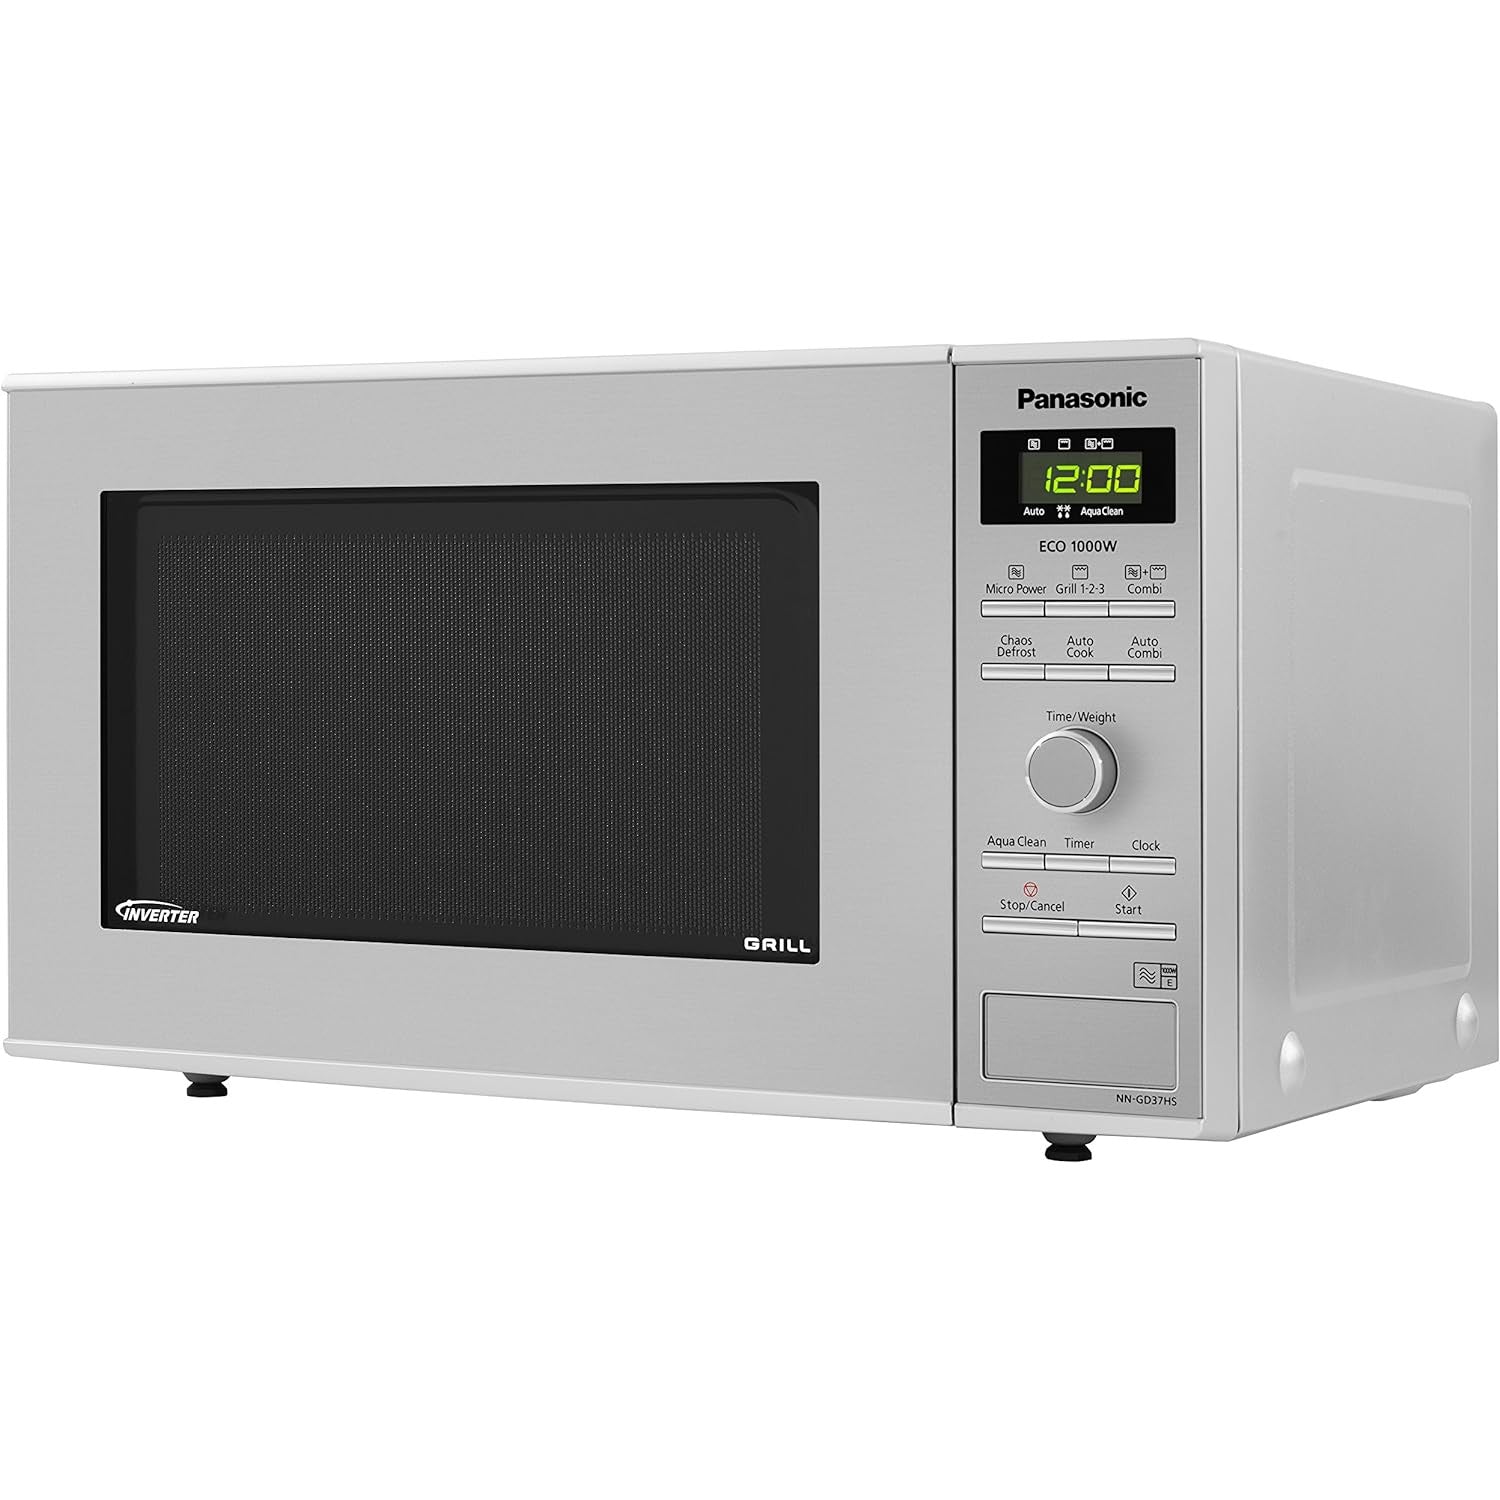 Panasonic NN-GD37HSBPQ Compact Microwave Oven - Silver